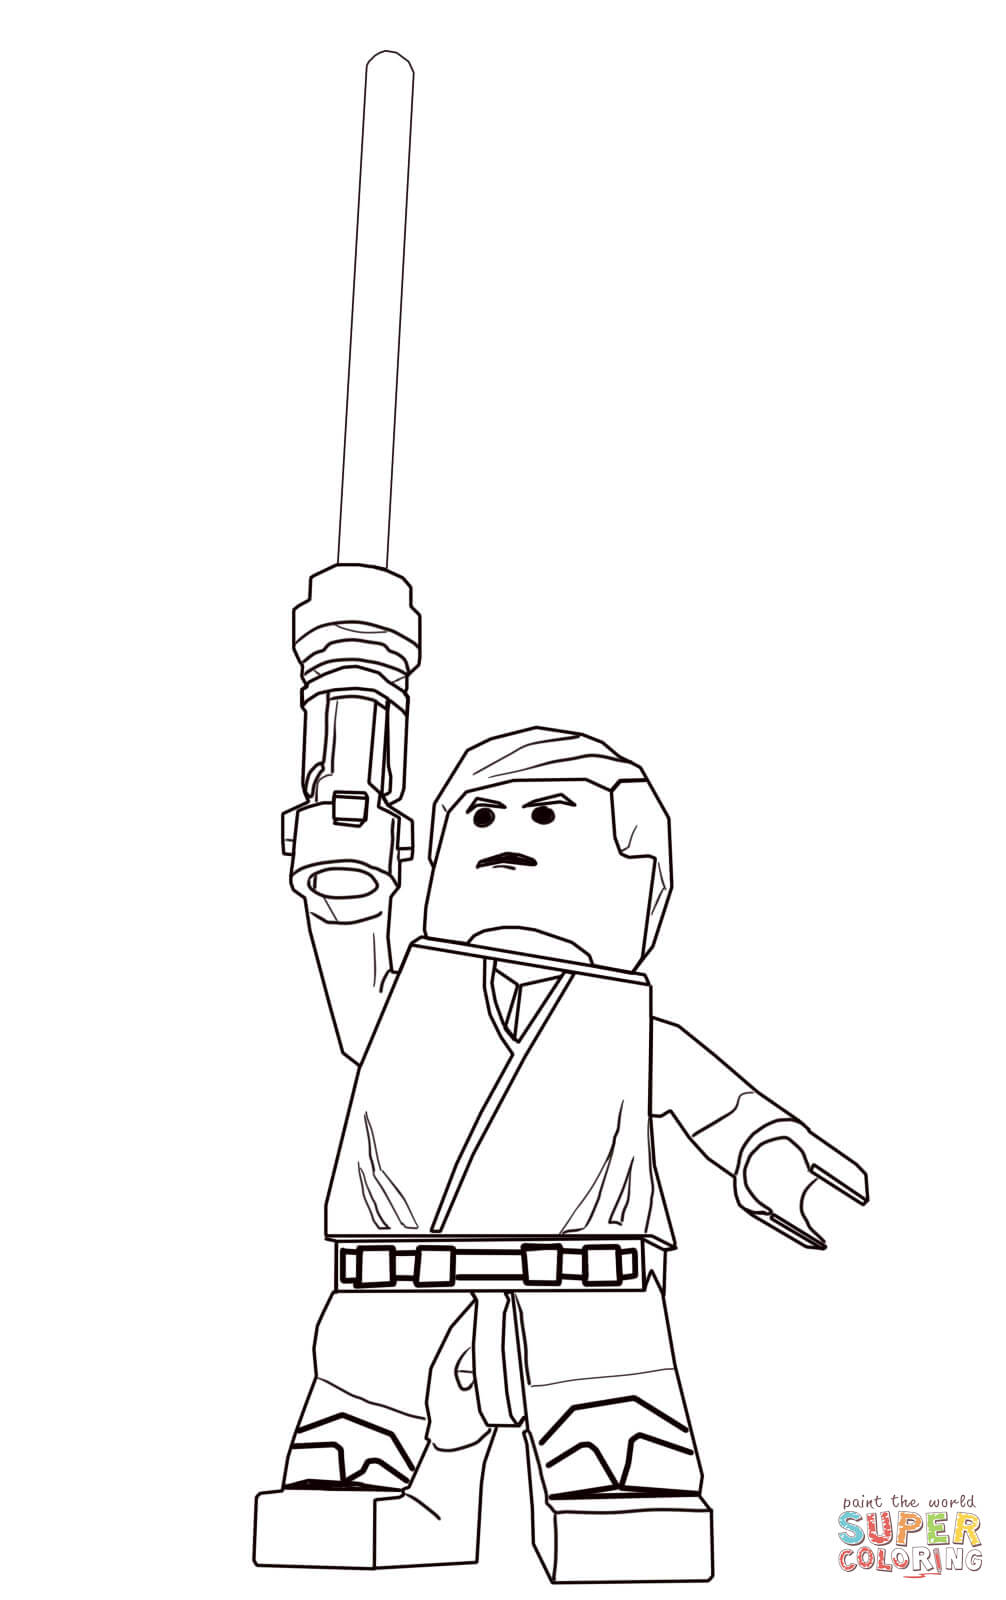 Lego Star Wars Luke Skywalker coloring page | Free Printable ...